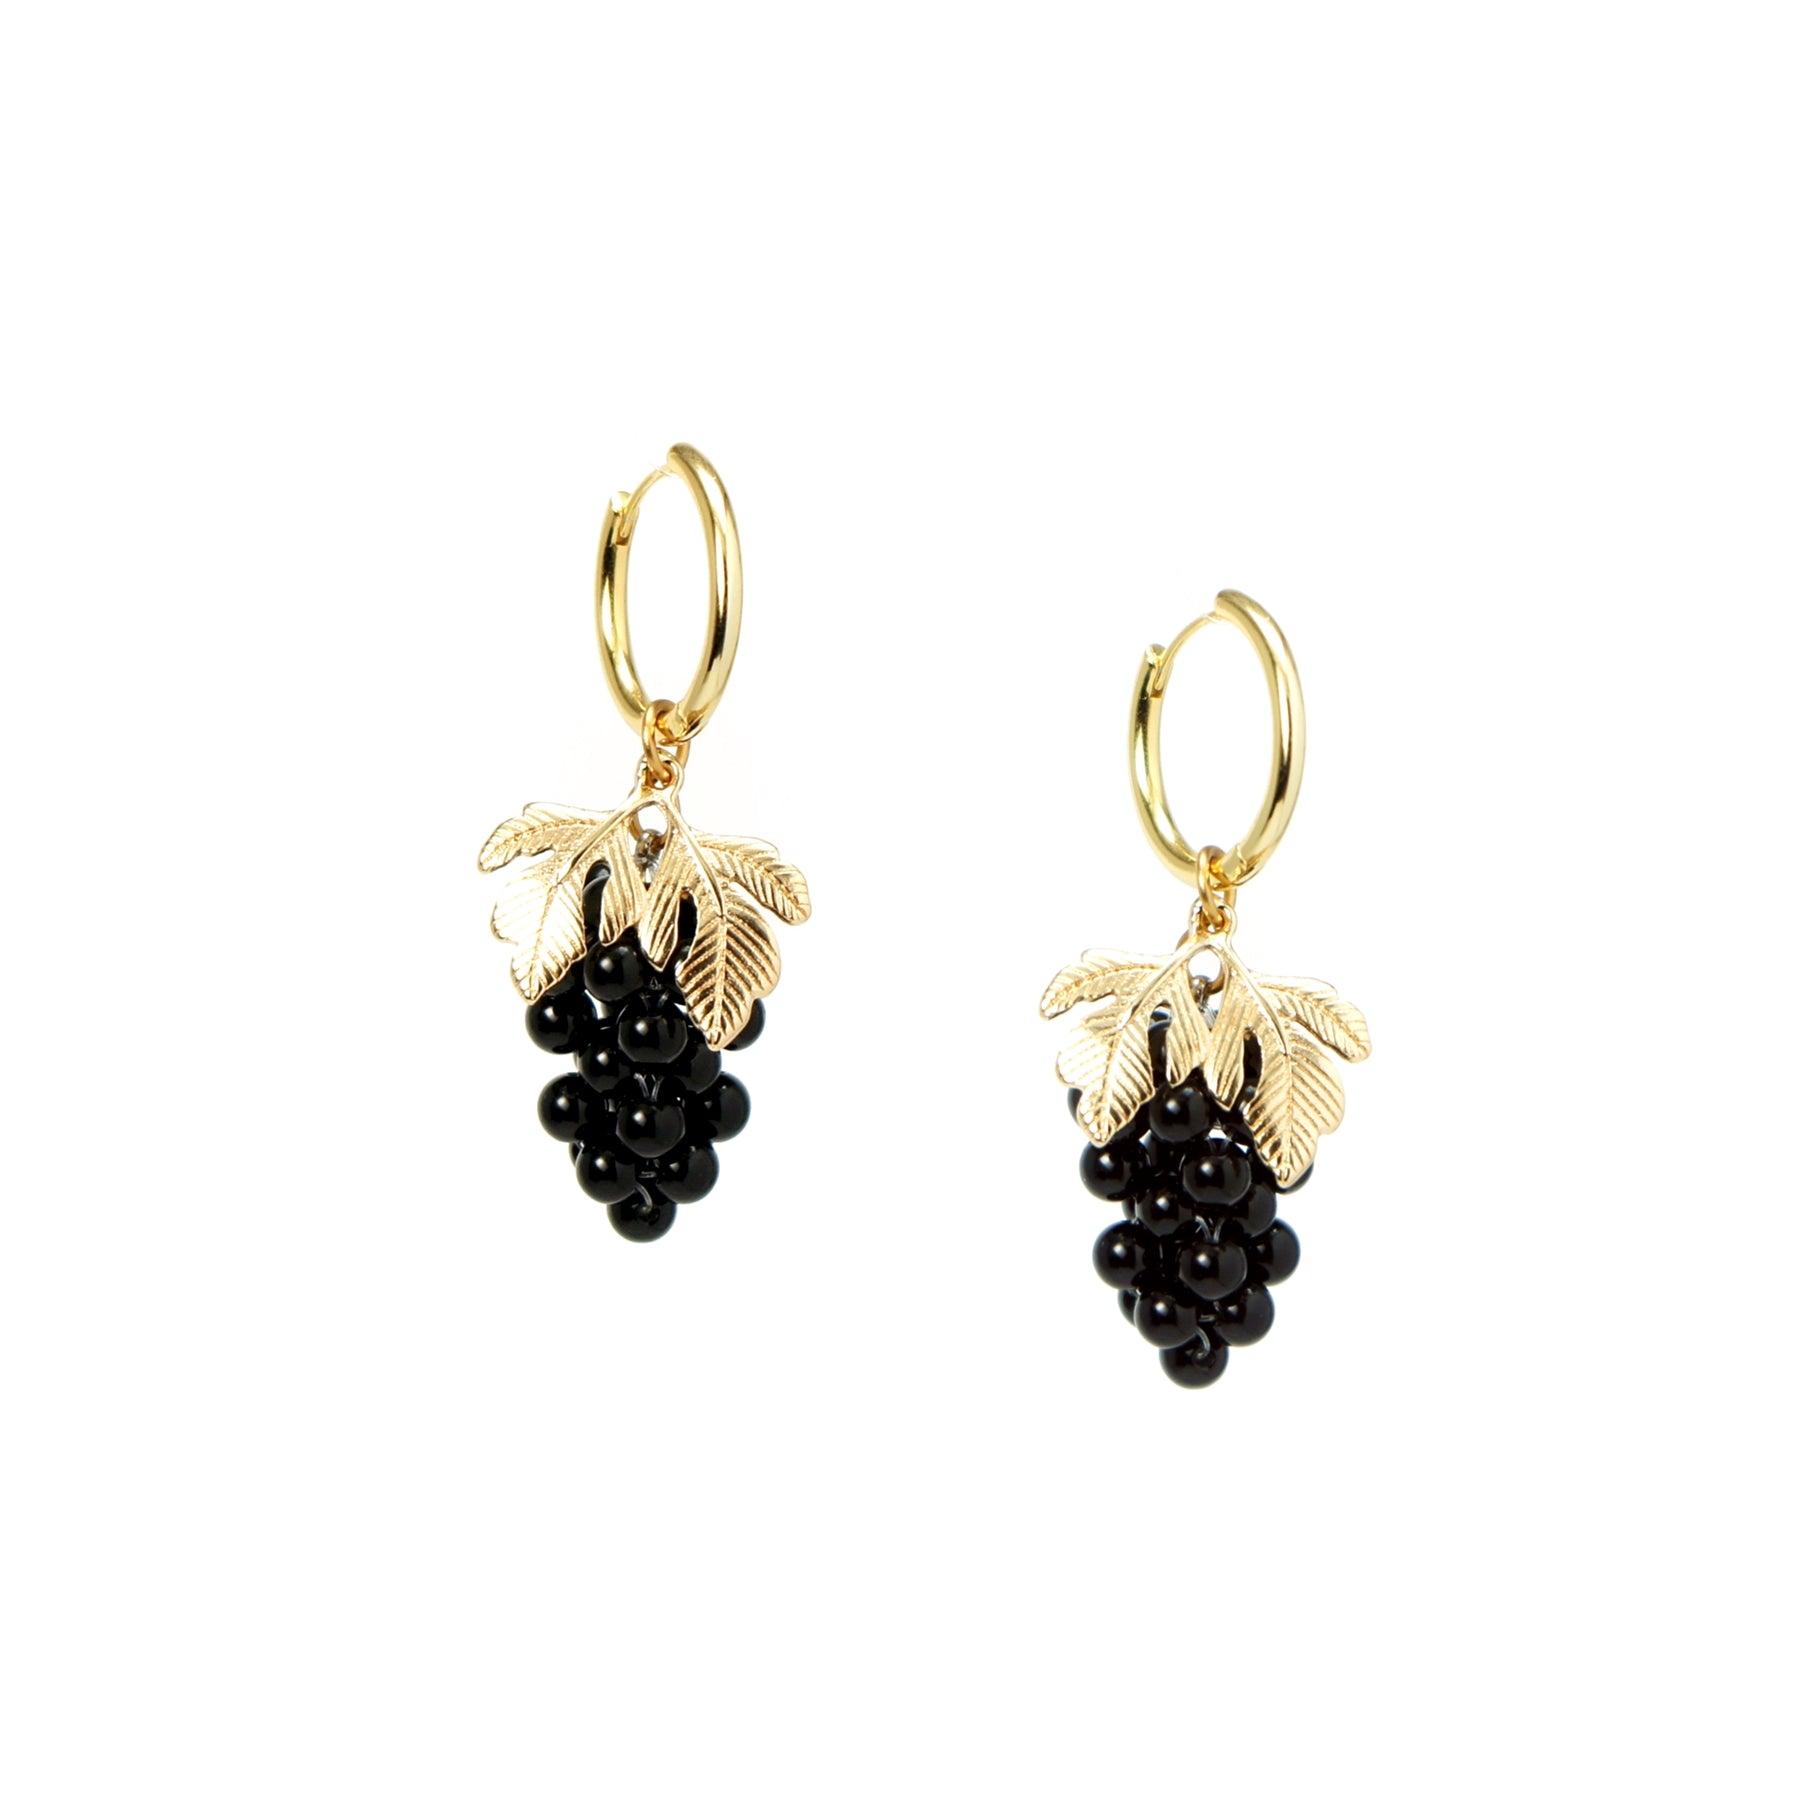 Update more than 176 grapes design earrings super hot